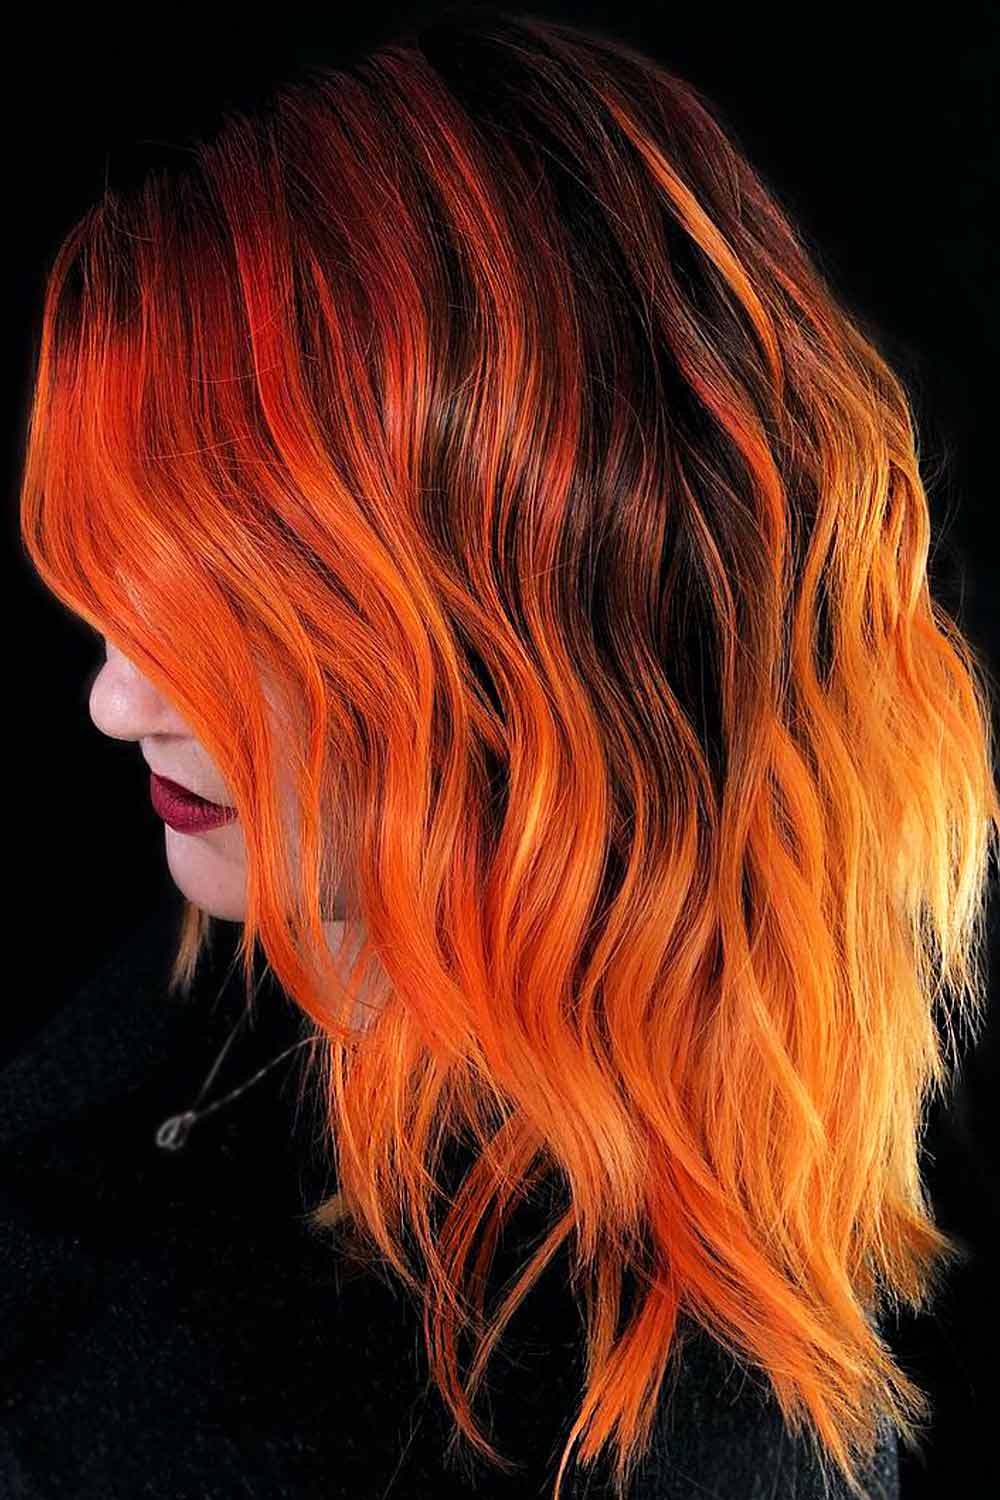 Fiery Orange Highlights Hair #blackhairwithhighlights #hairwithhighlights #orange